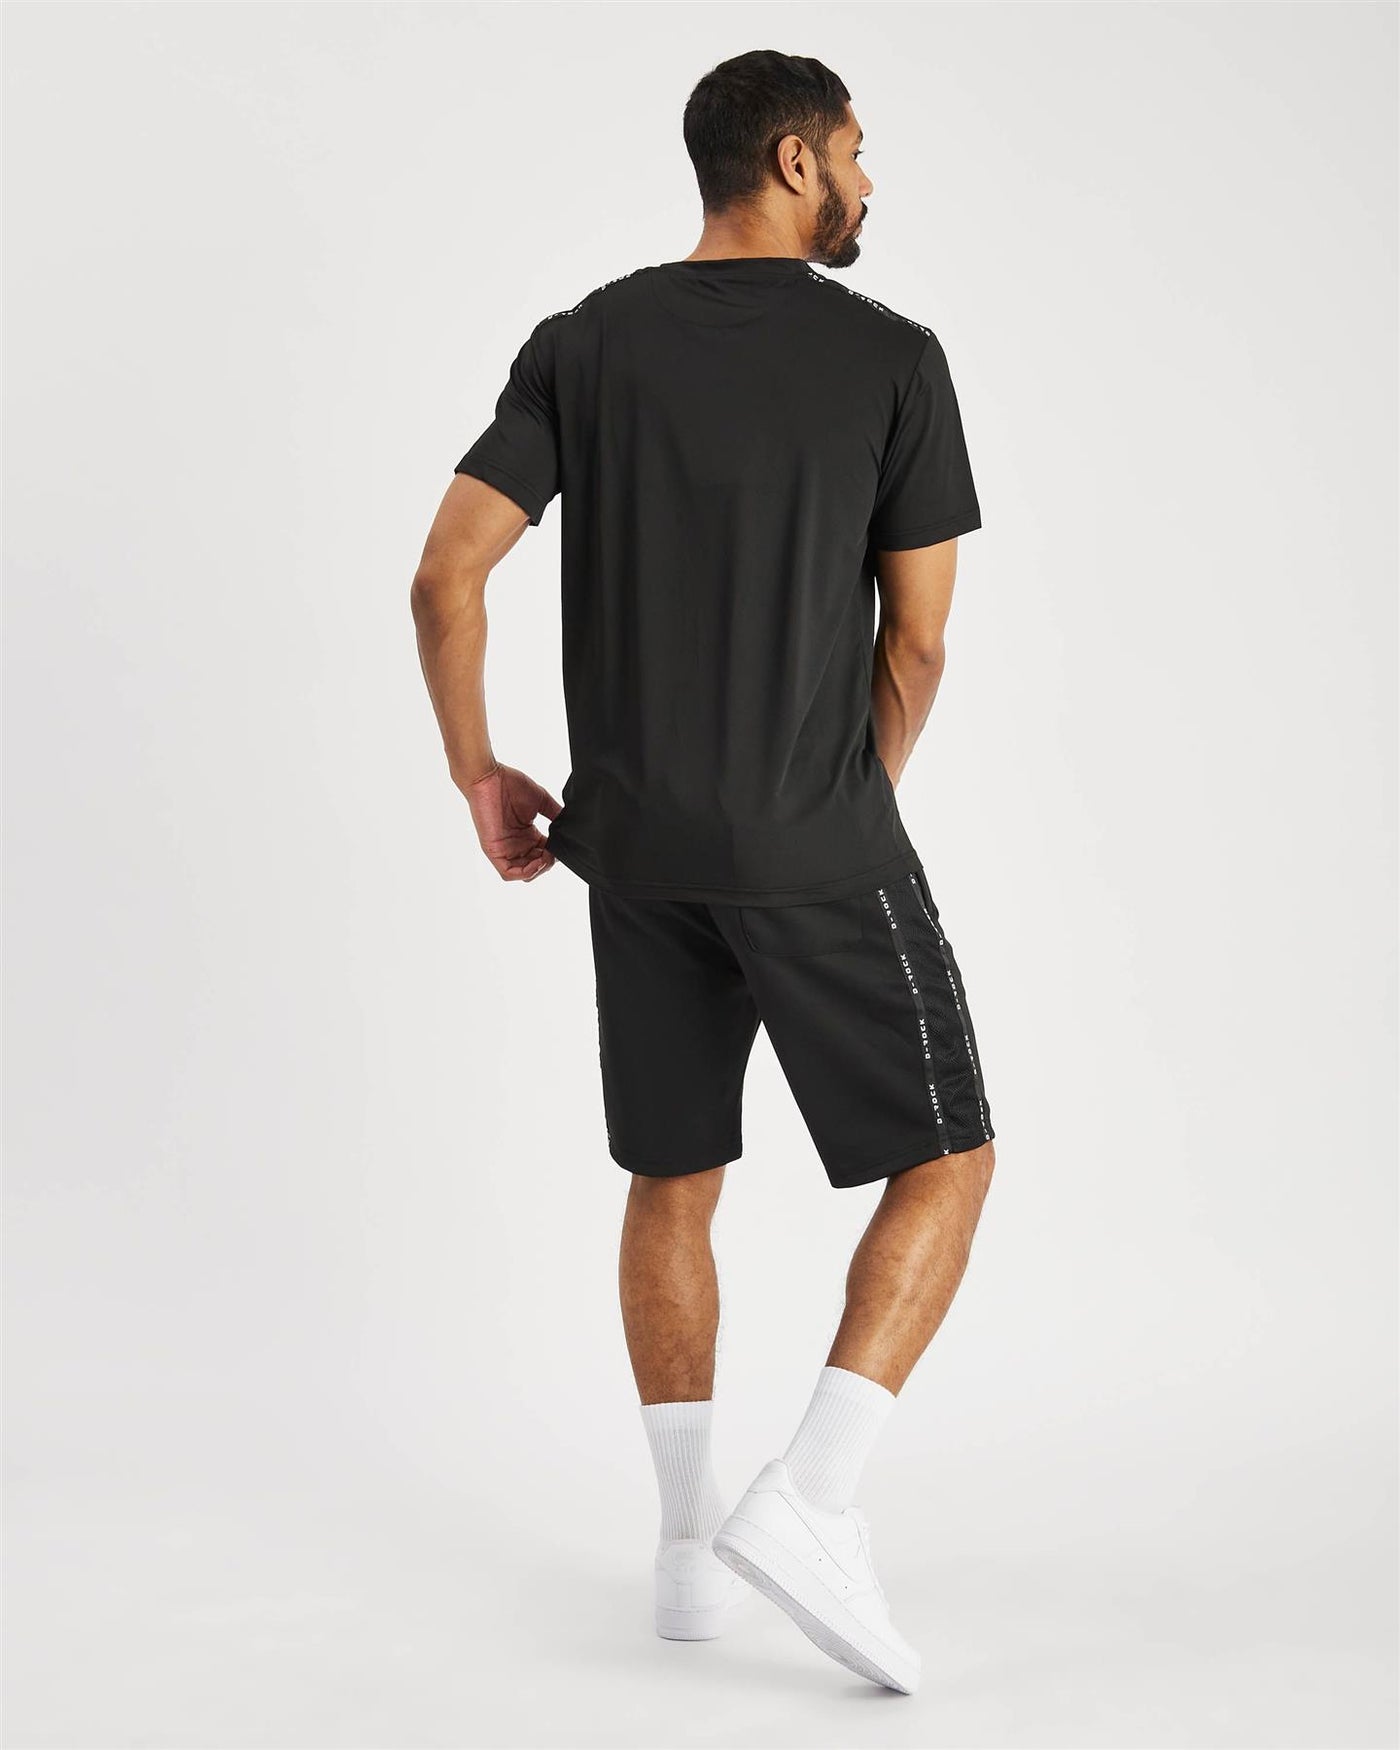 Mens T-Shirt Shorts Set Designer Summer Sportswear Durable Stretch Polyester